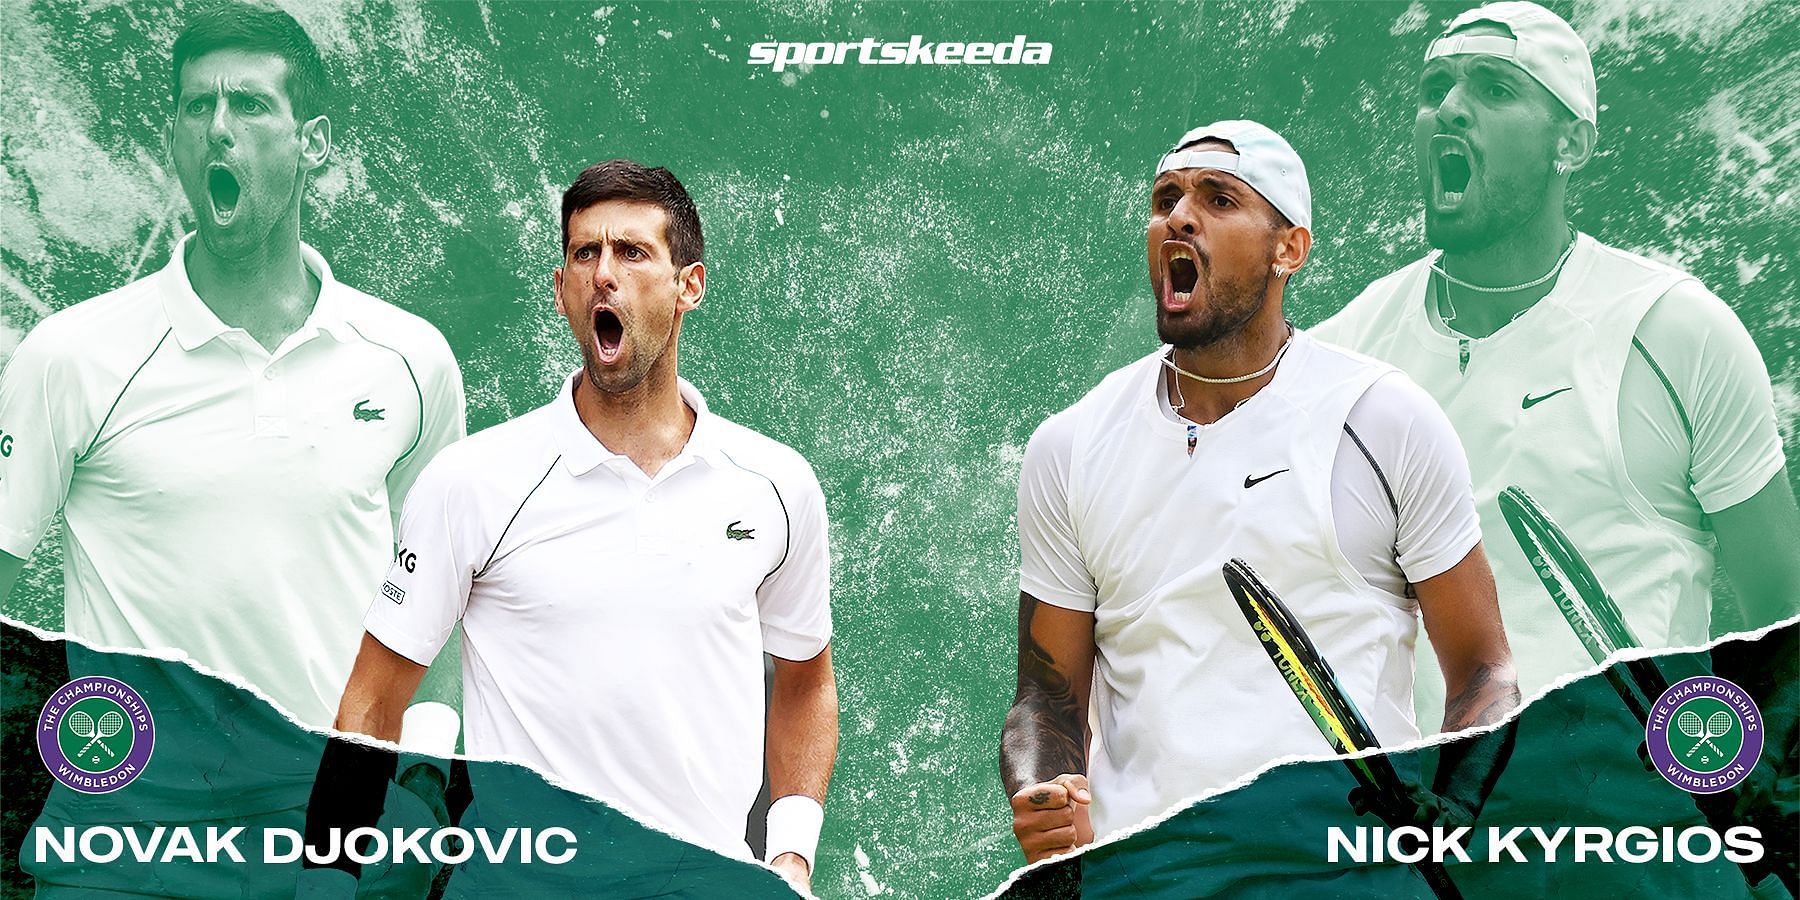 Novak Djokovic will meet Nick Kyrgios in the Wimbledon final